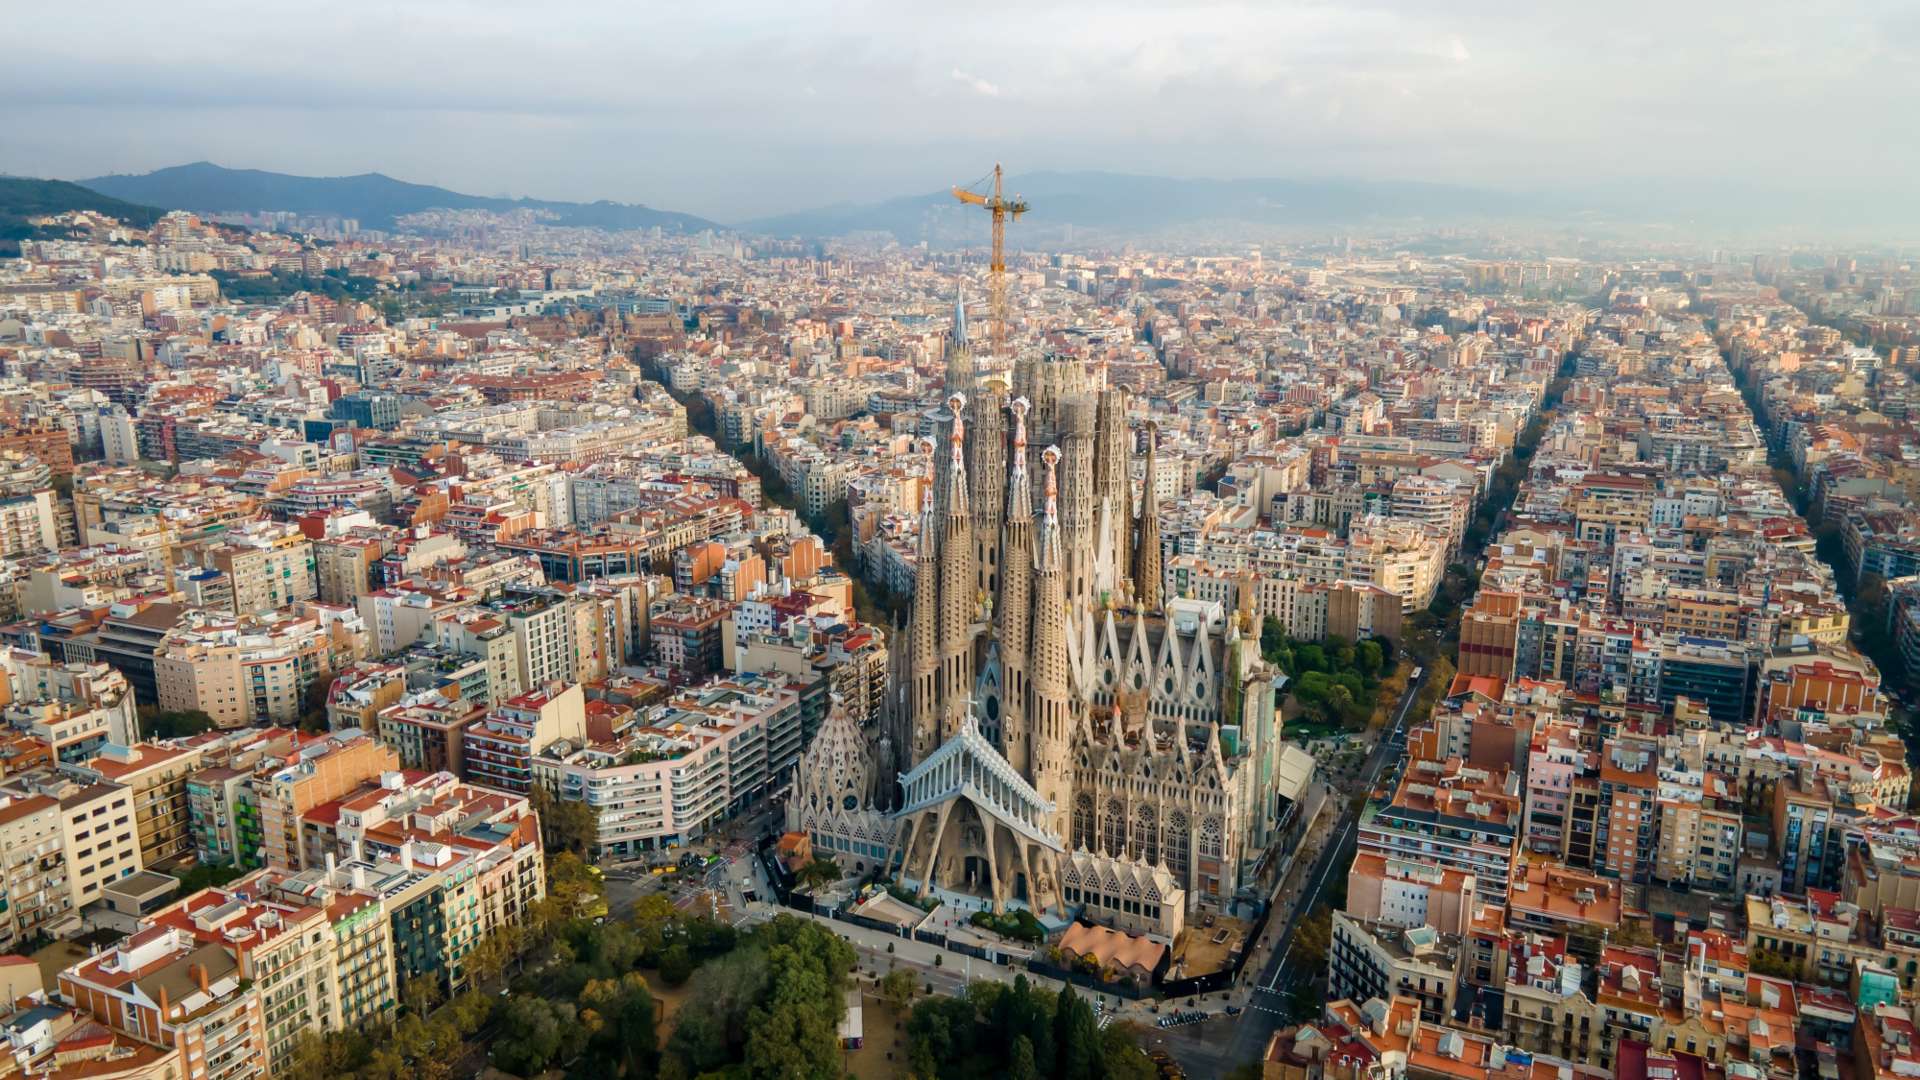 Aerial Drone View Of Barcelona Spain 2023 03 30 02 07 38 Utc